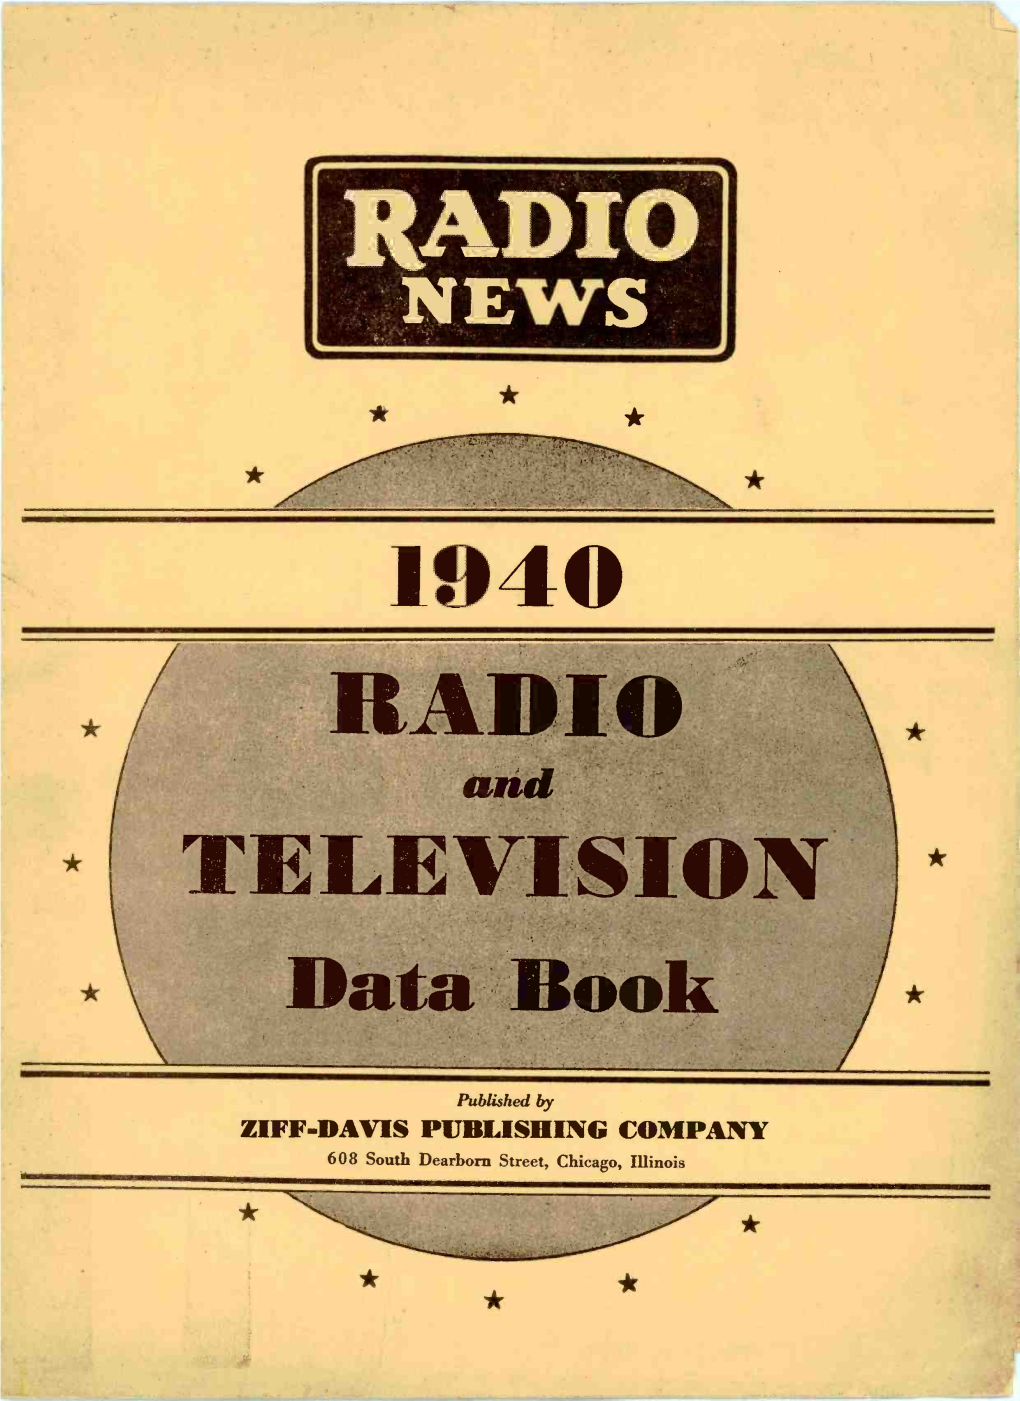 TELEVISION Data